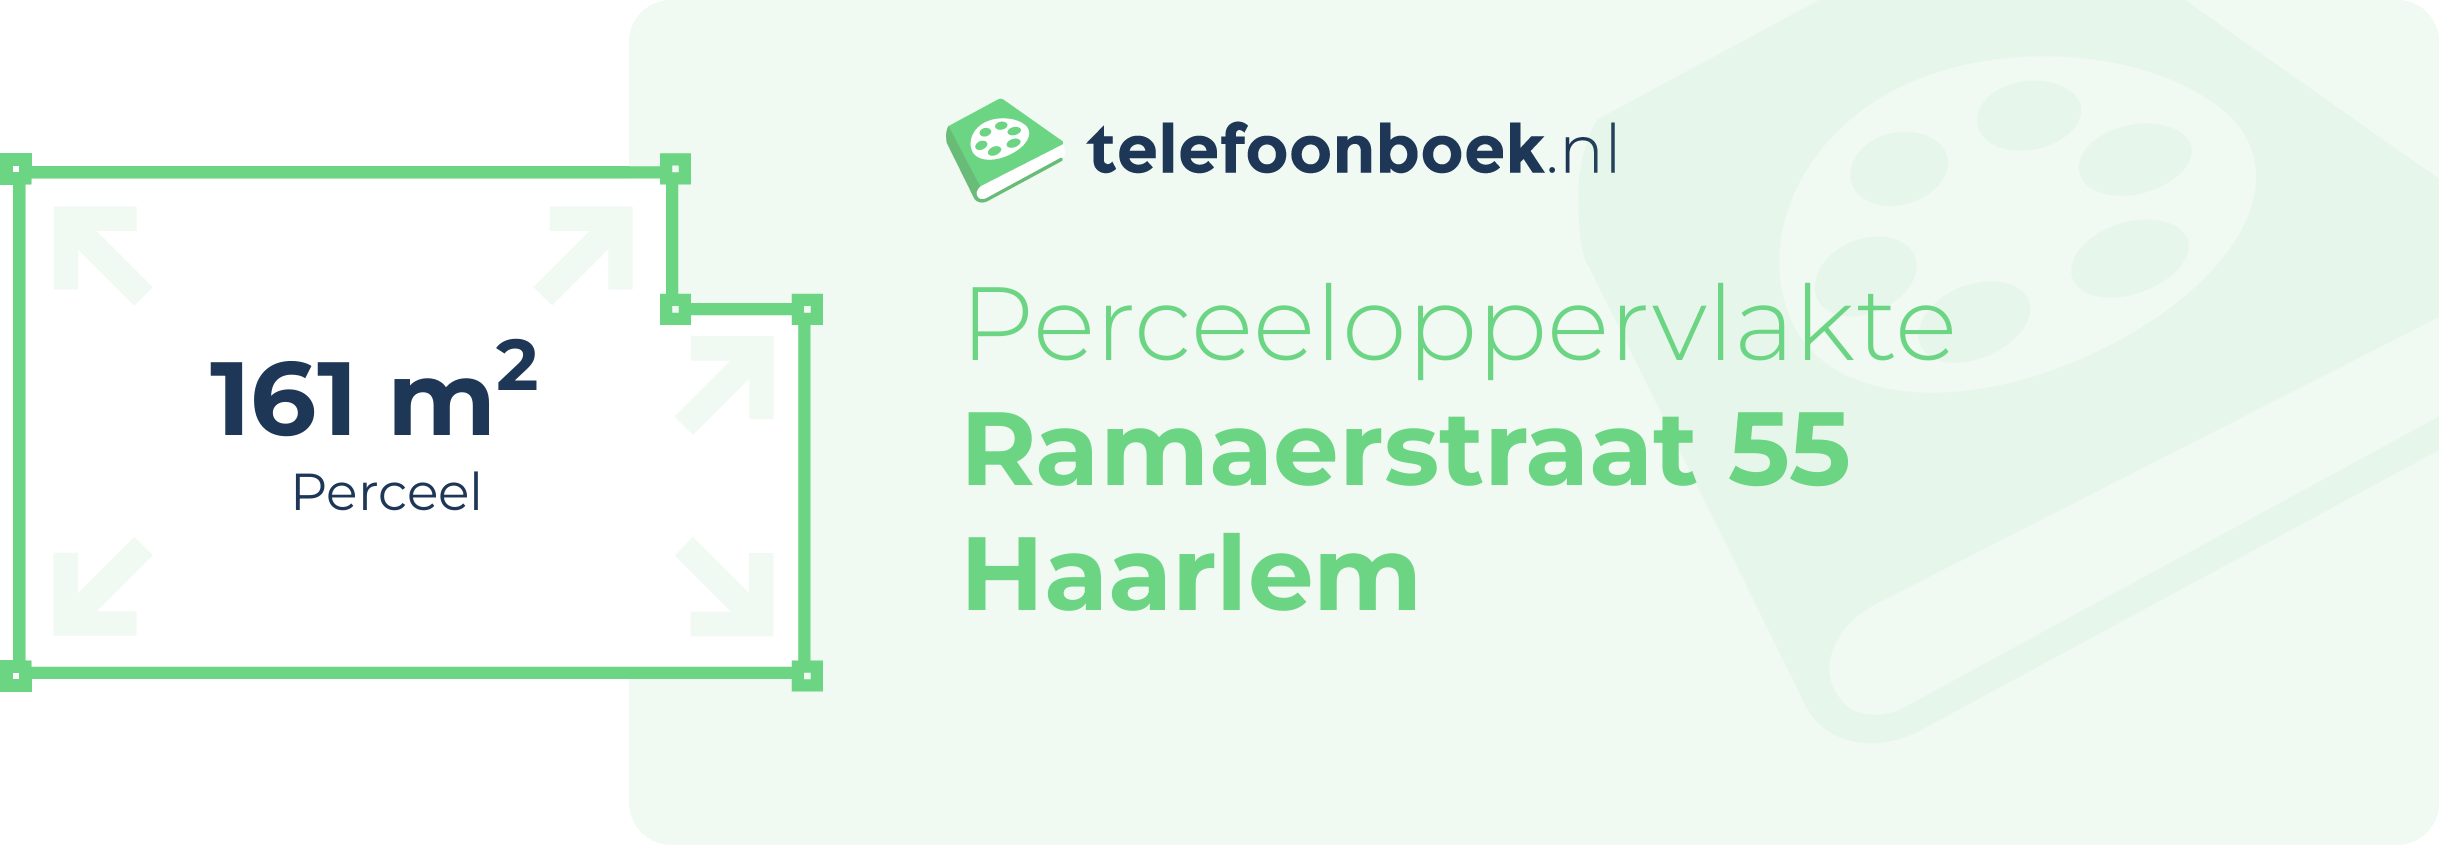 Perceeloppervlakte Ramaerstraat 55 Haarlem